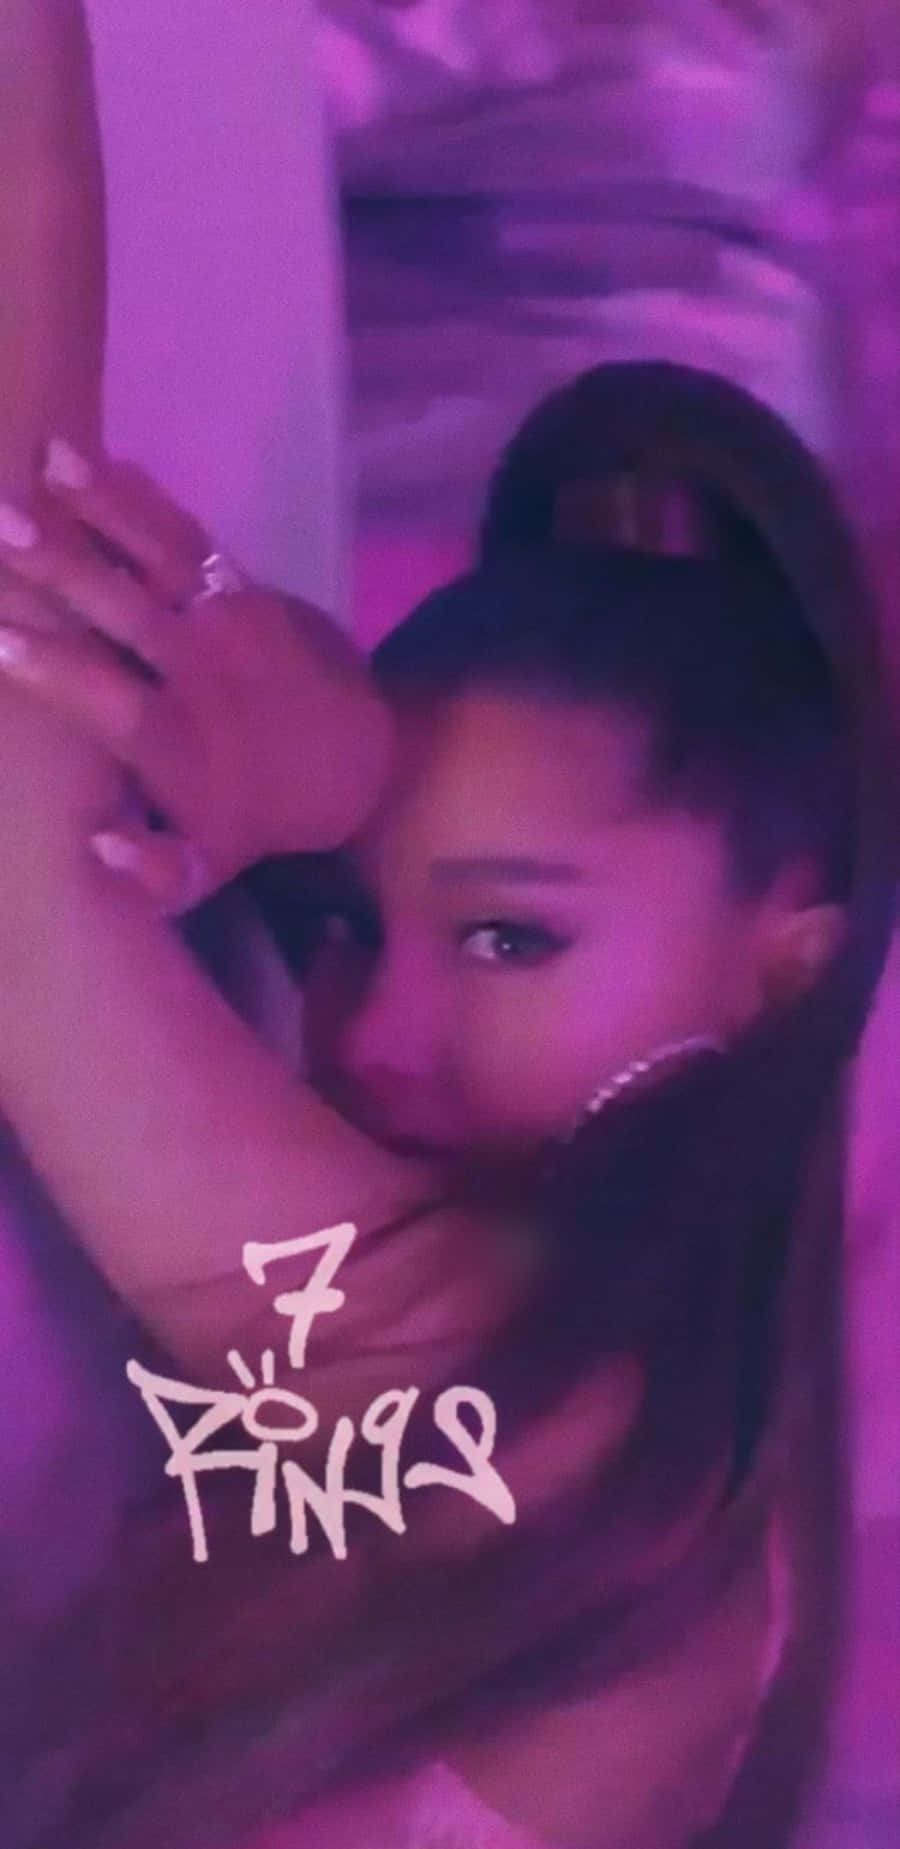 Arianagrande 7 Rings Musikvideo. Wallpaper